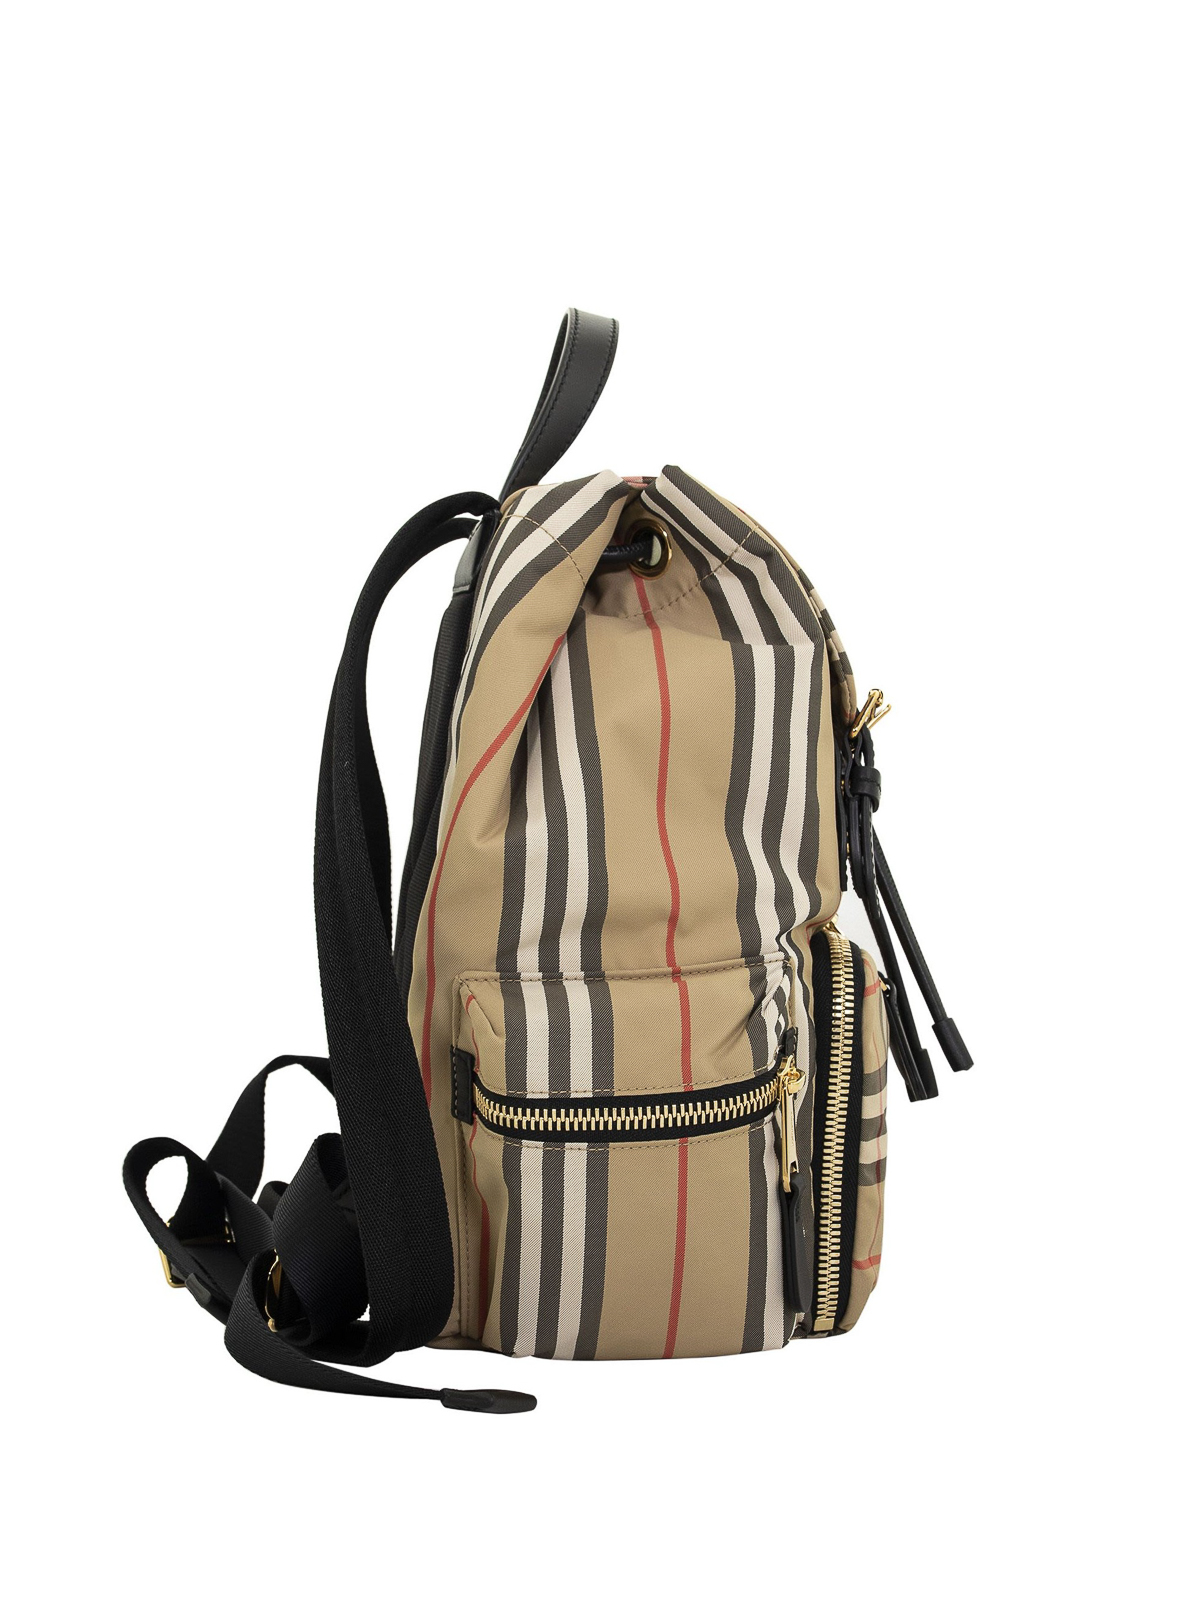 Backpacks Burberry - The Rucksack Vintage check medium backpack 